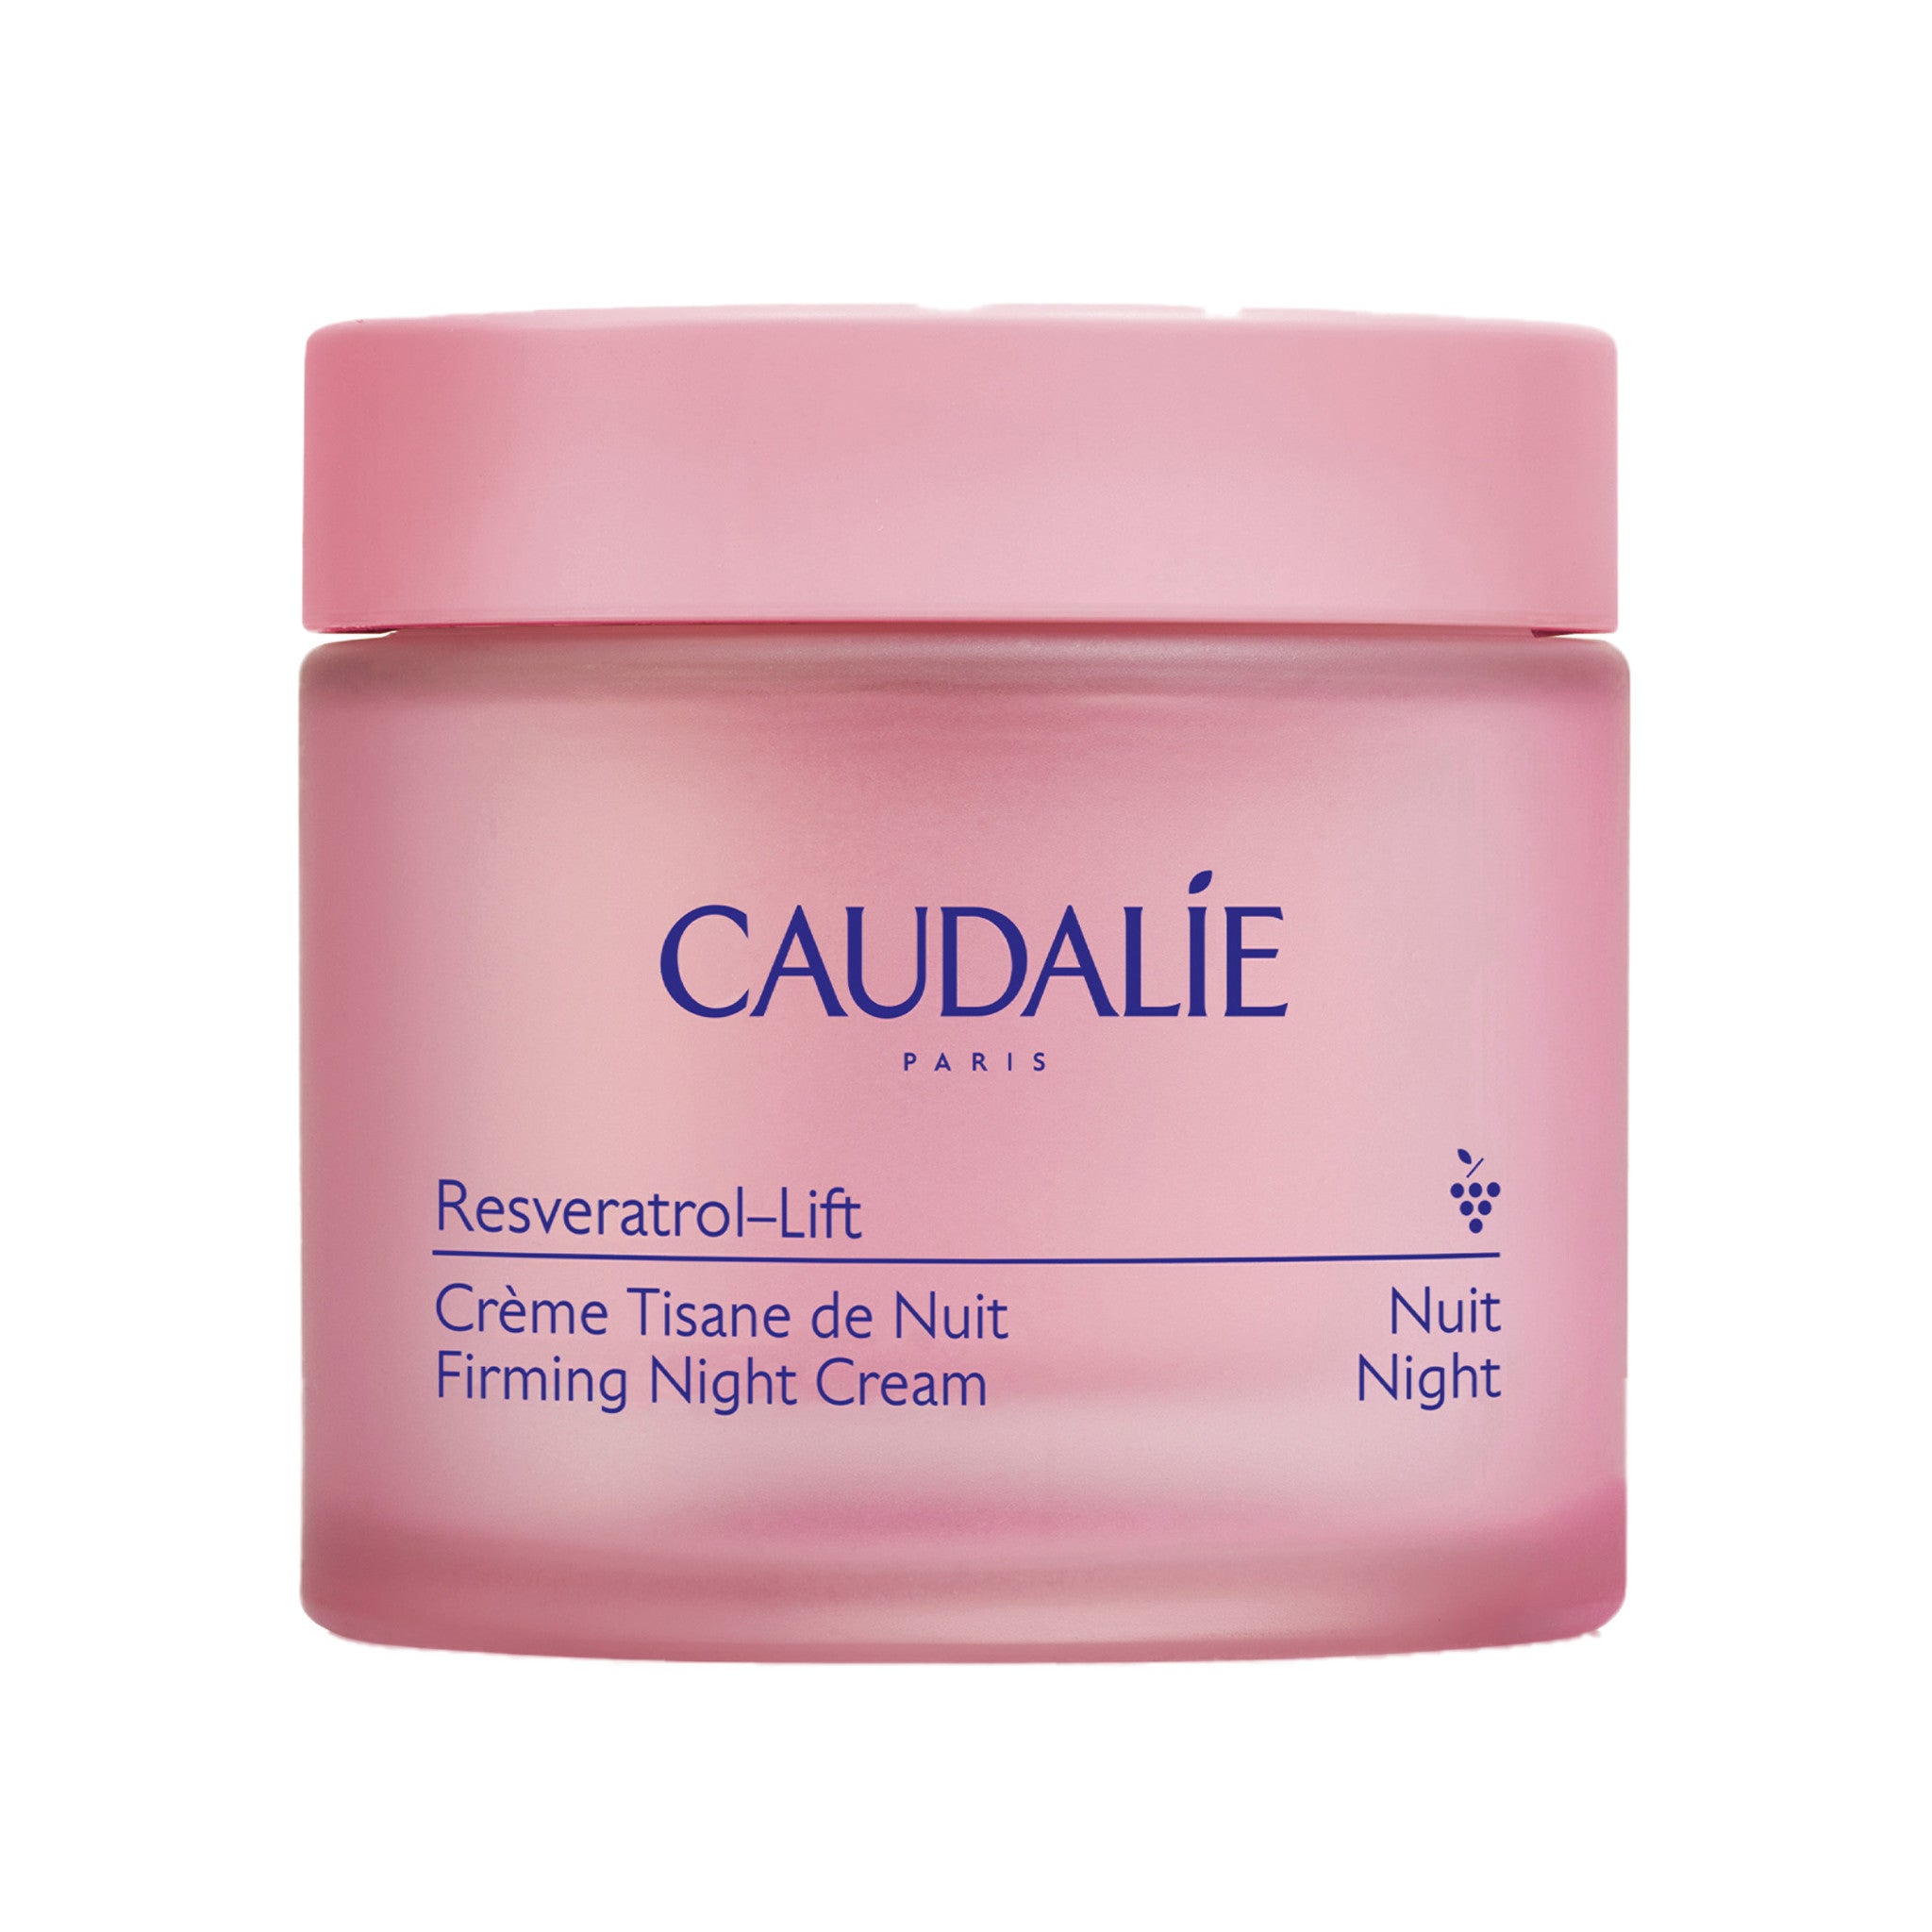 Caudalie Resveratrol-Lift Firming Night Cream main image.